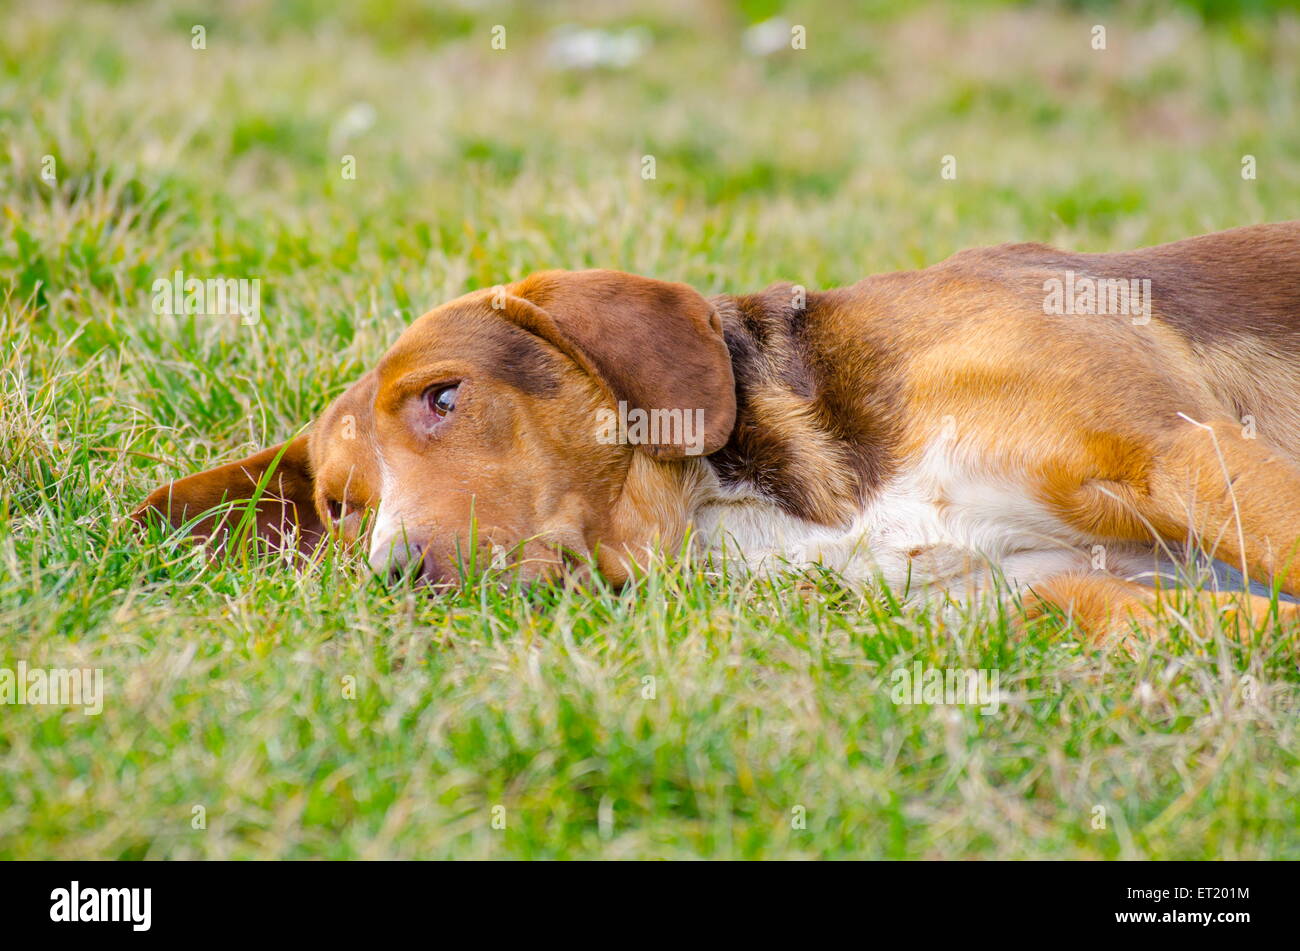 Sleepy dog with orange reddish fur lying in the grass Stock Photo